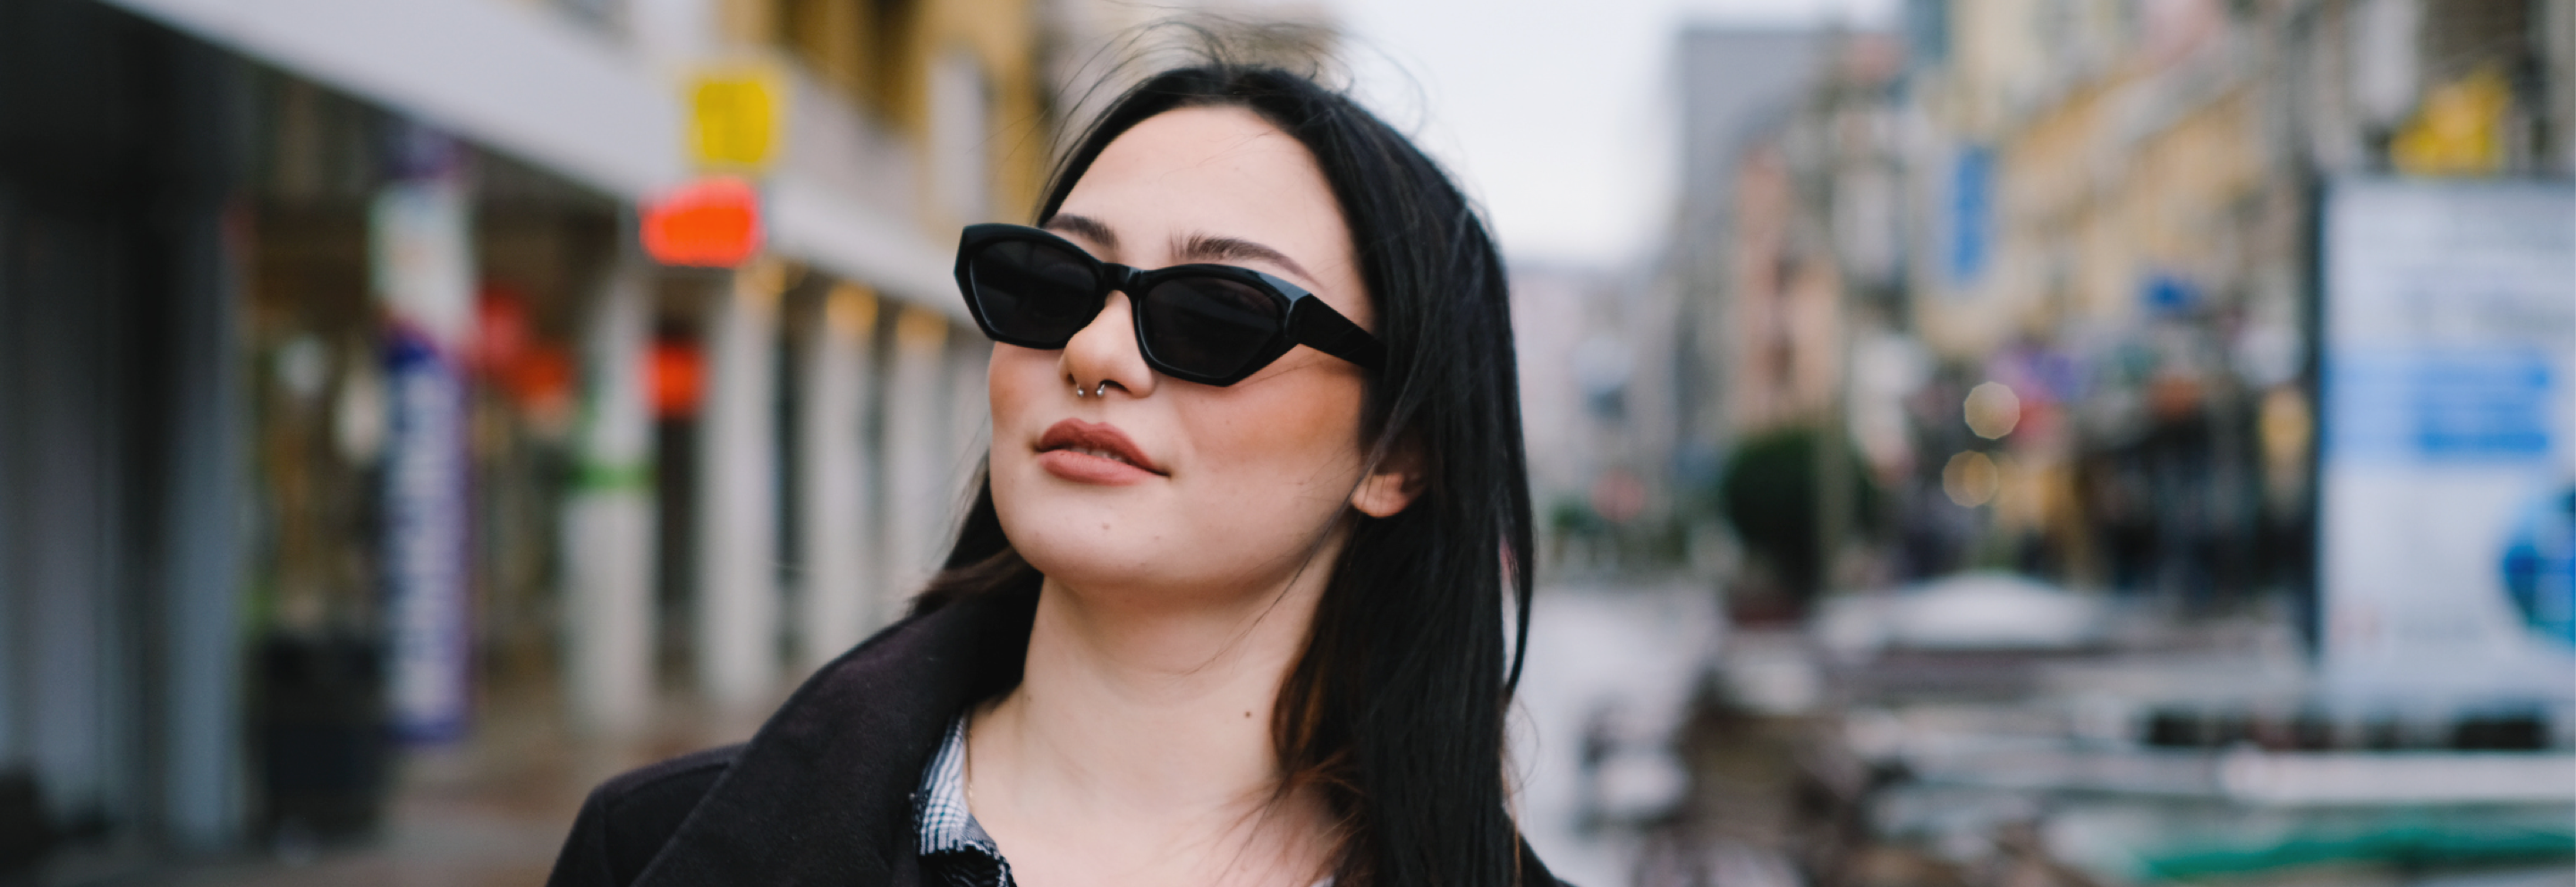 Lady wearing slim black sunglasses in high street